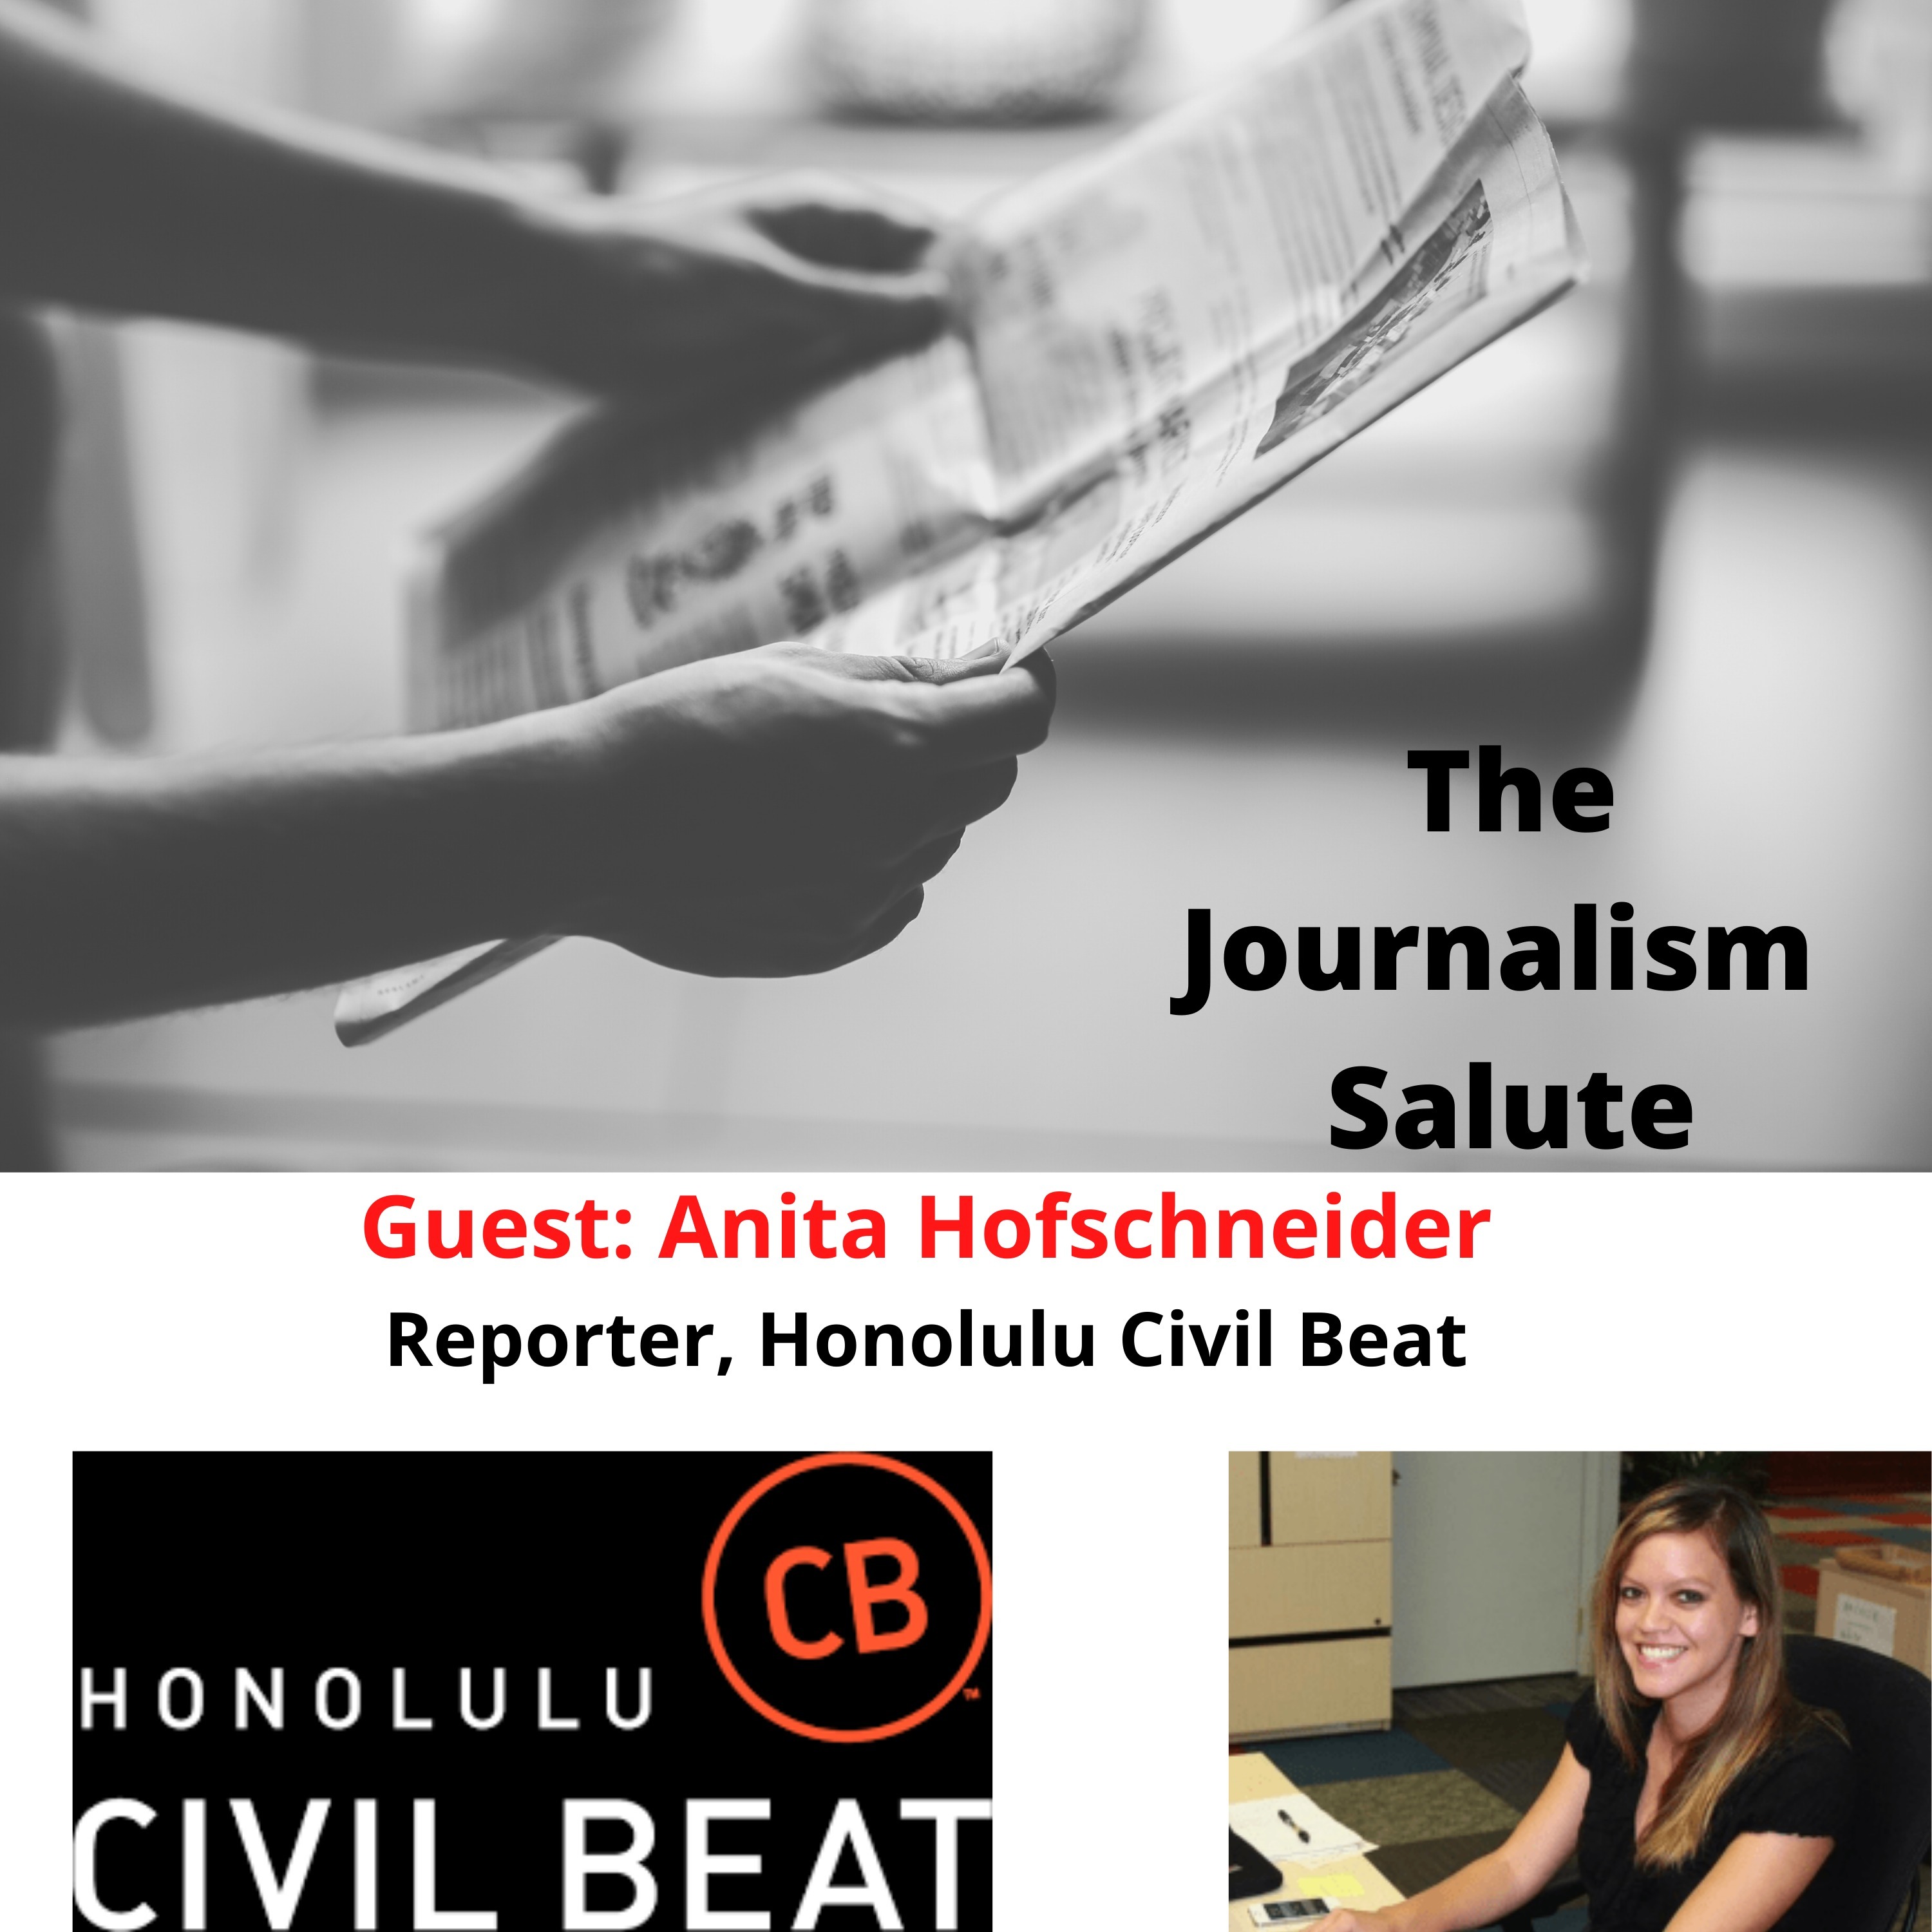 Anita Hofschneider, Honolulu Civil Beat Reporter